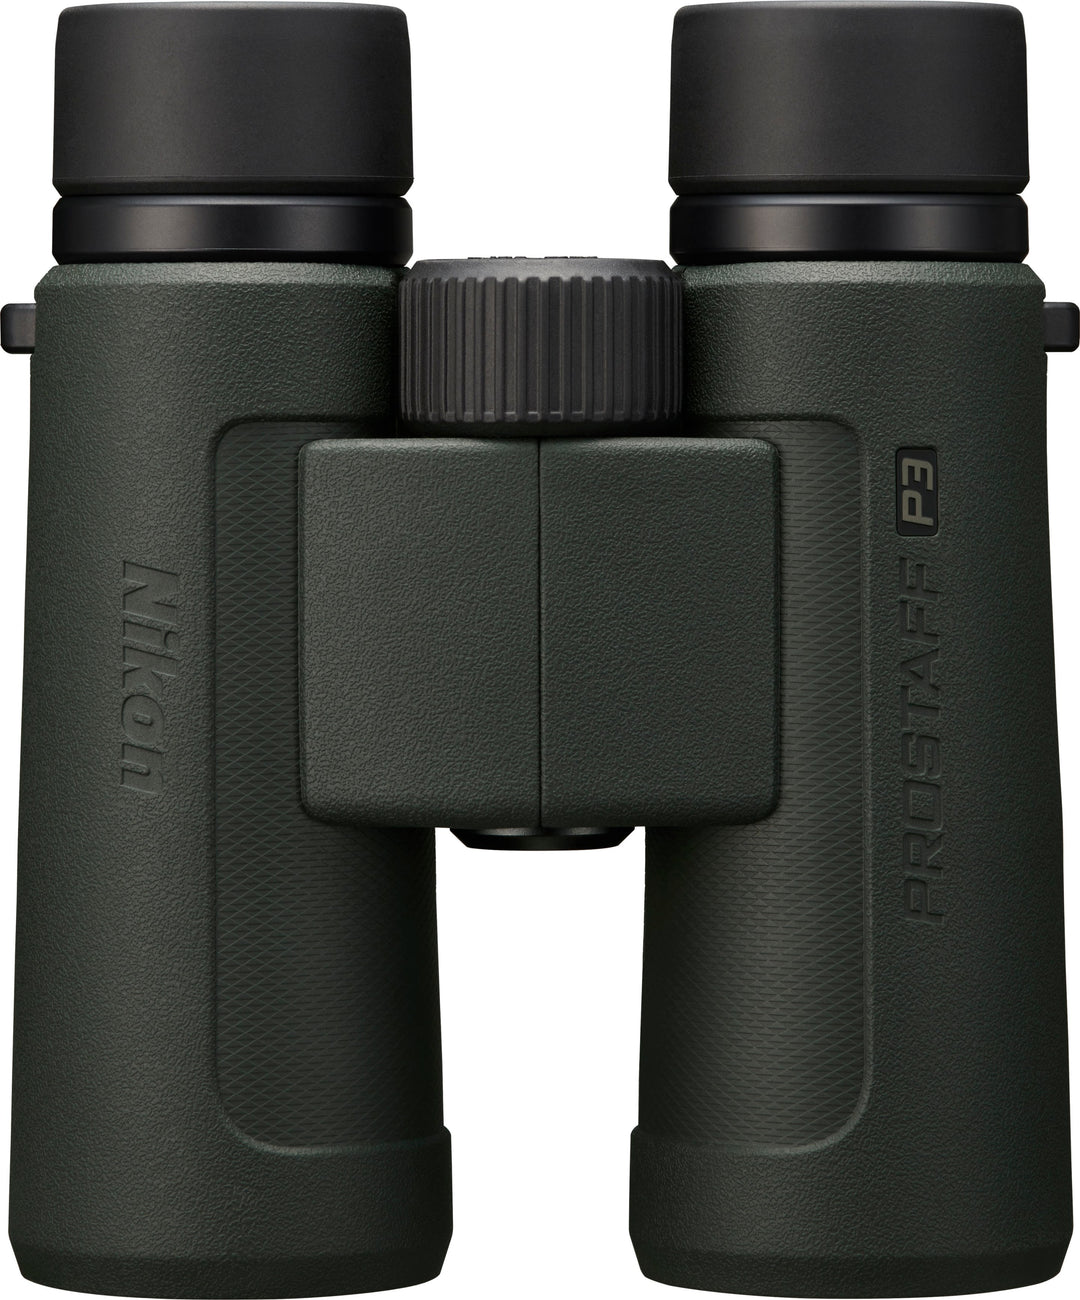 Nikon - PROSTAFF P3 10X42 Waterproof Binoculars - Green_0